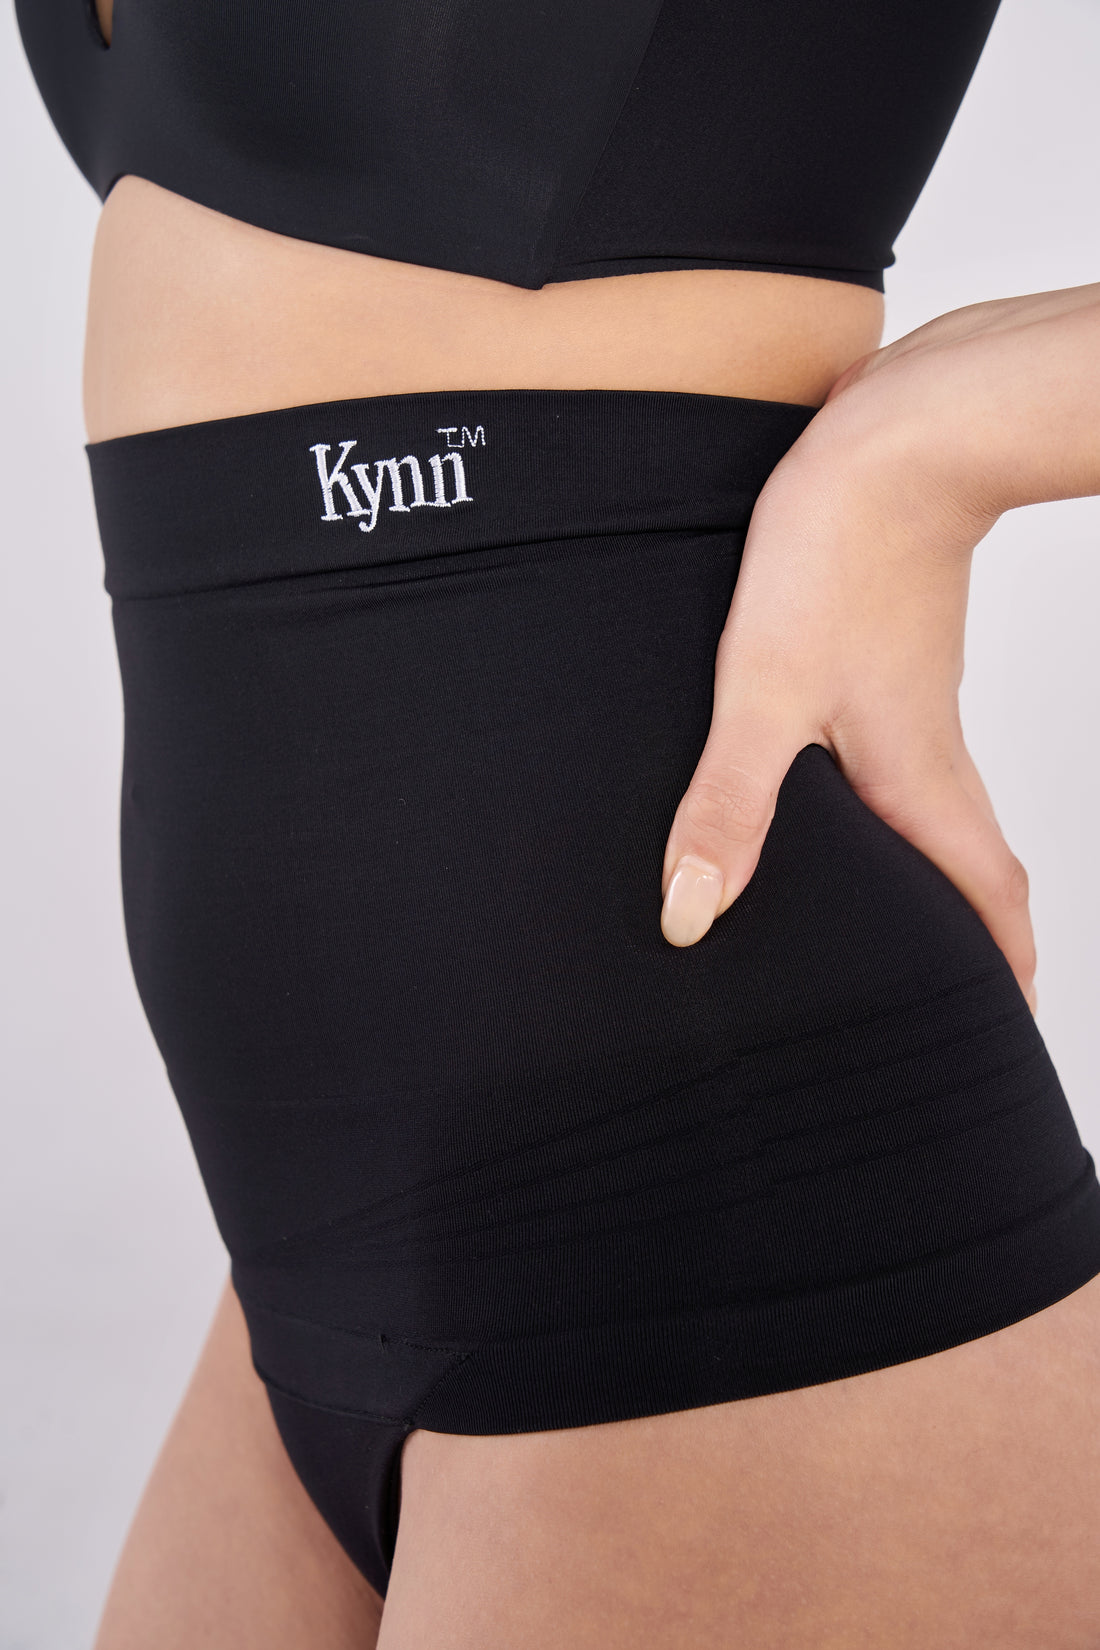 Shaping Underwear – Kynn Confidence Wear